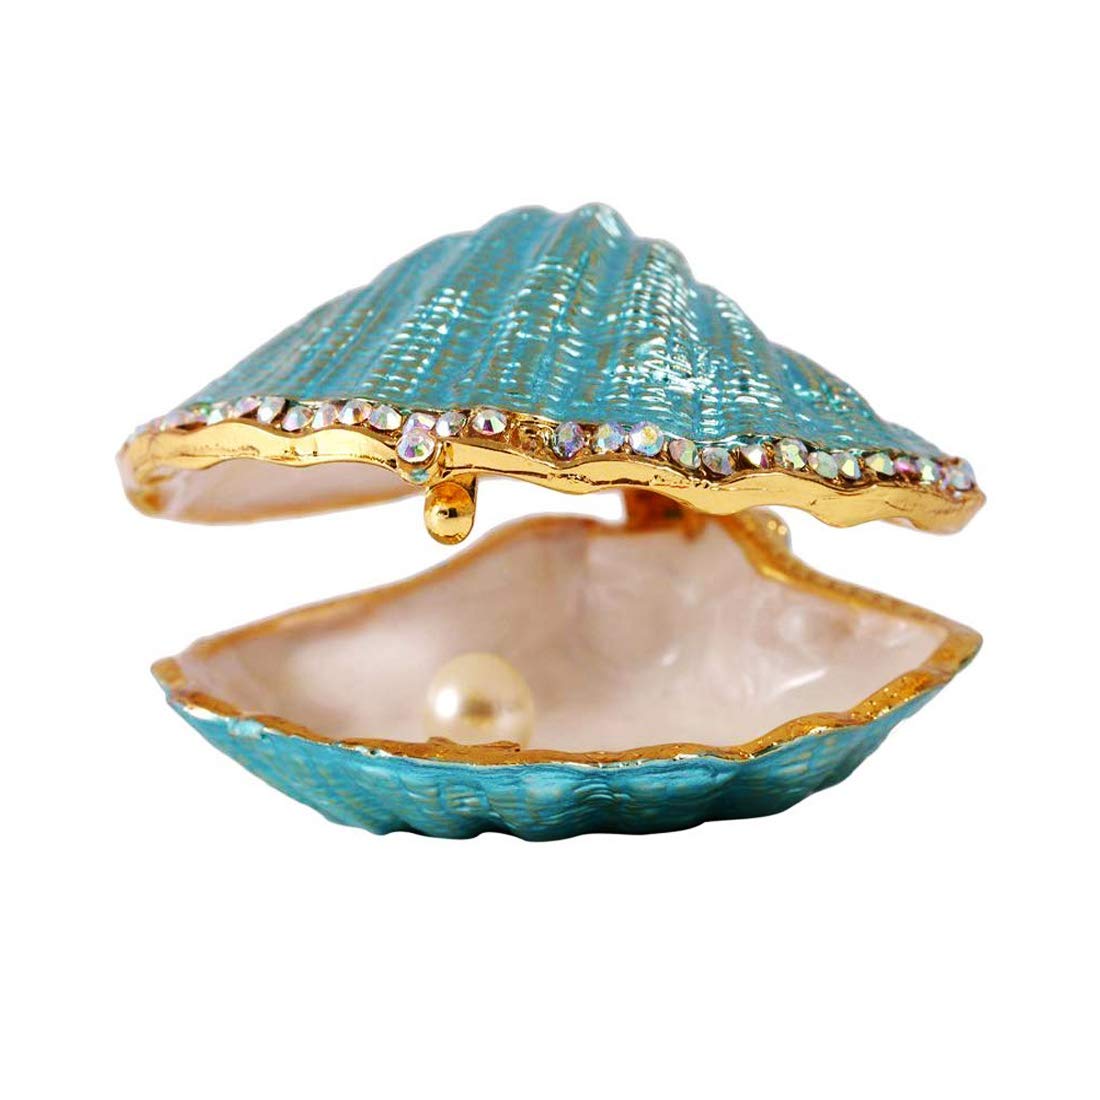 clam ring holder